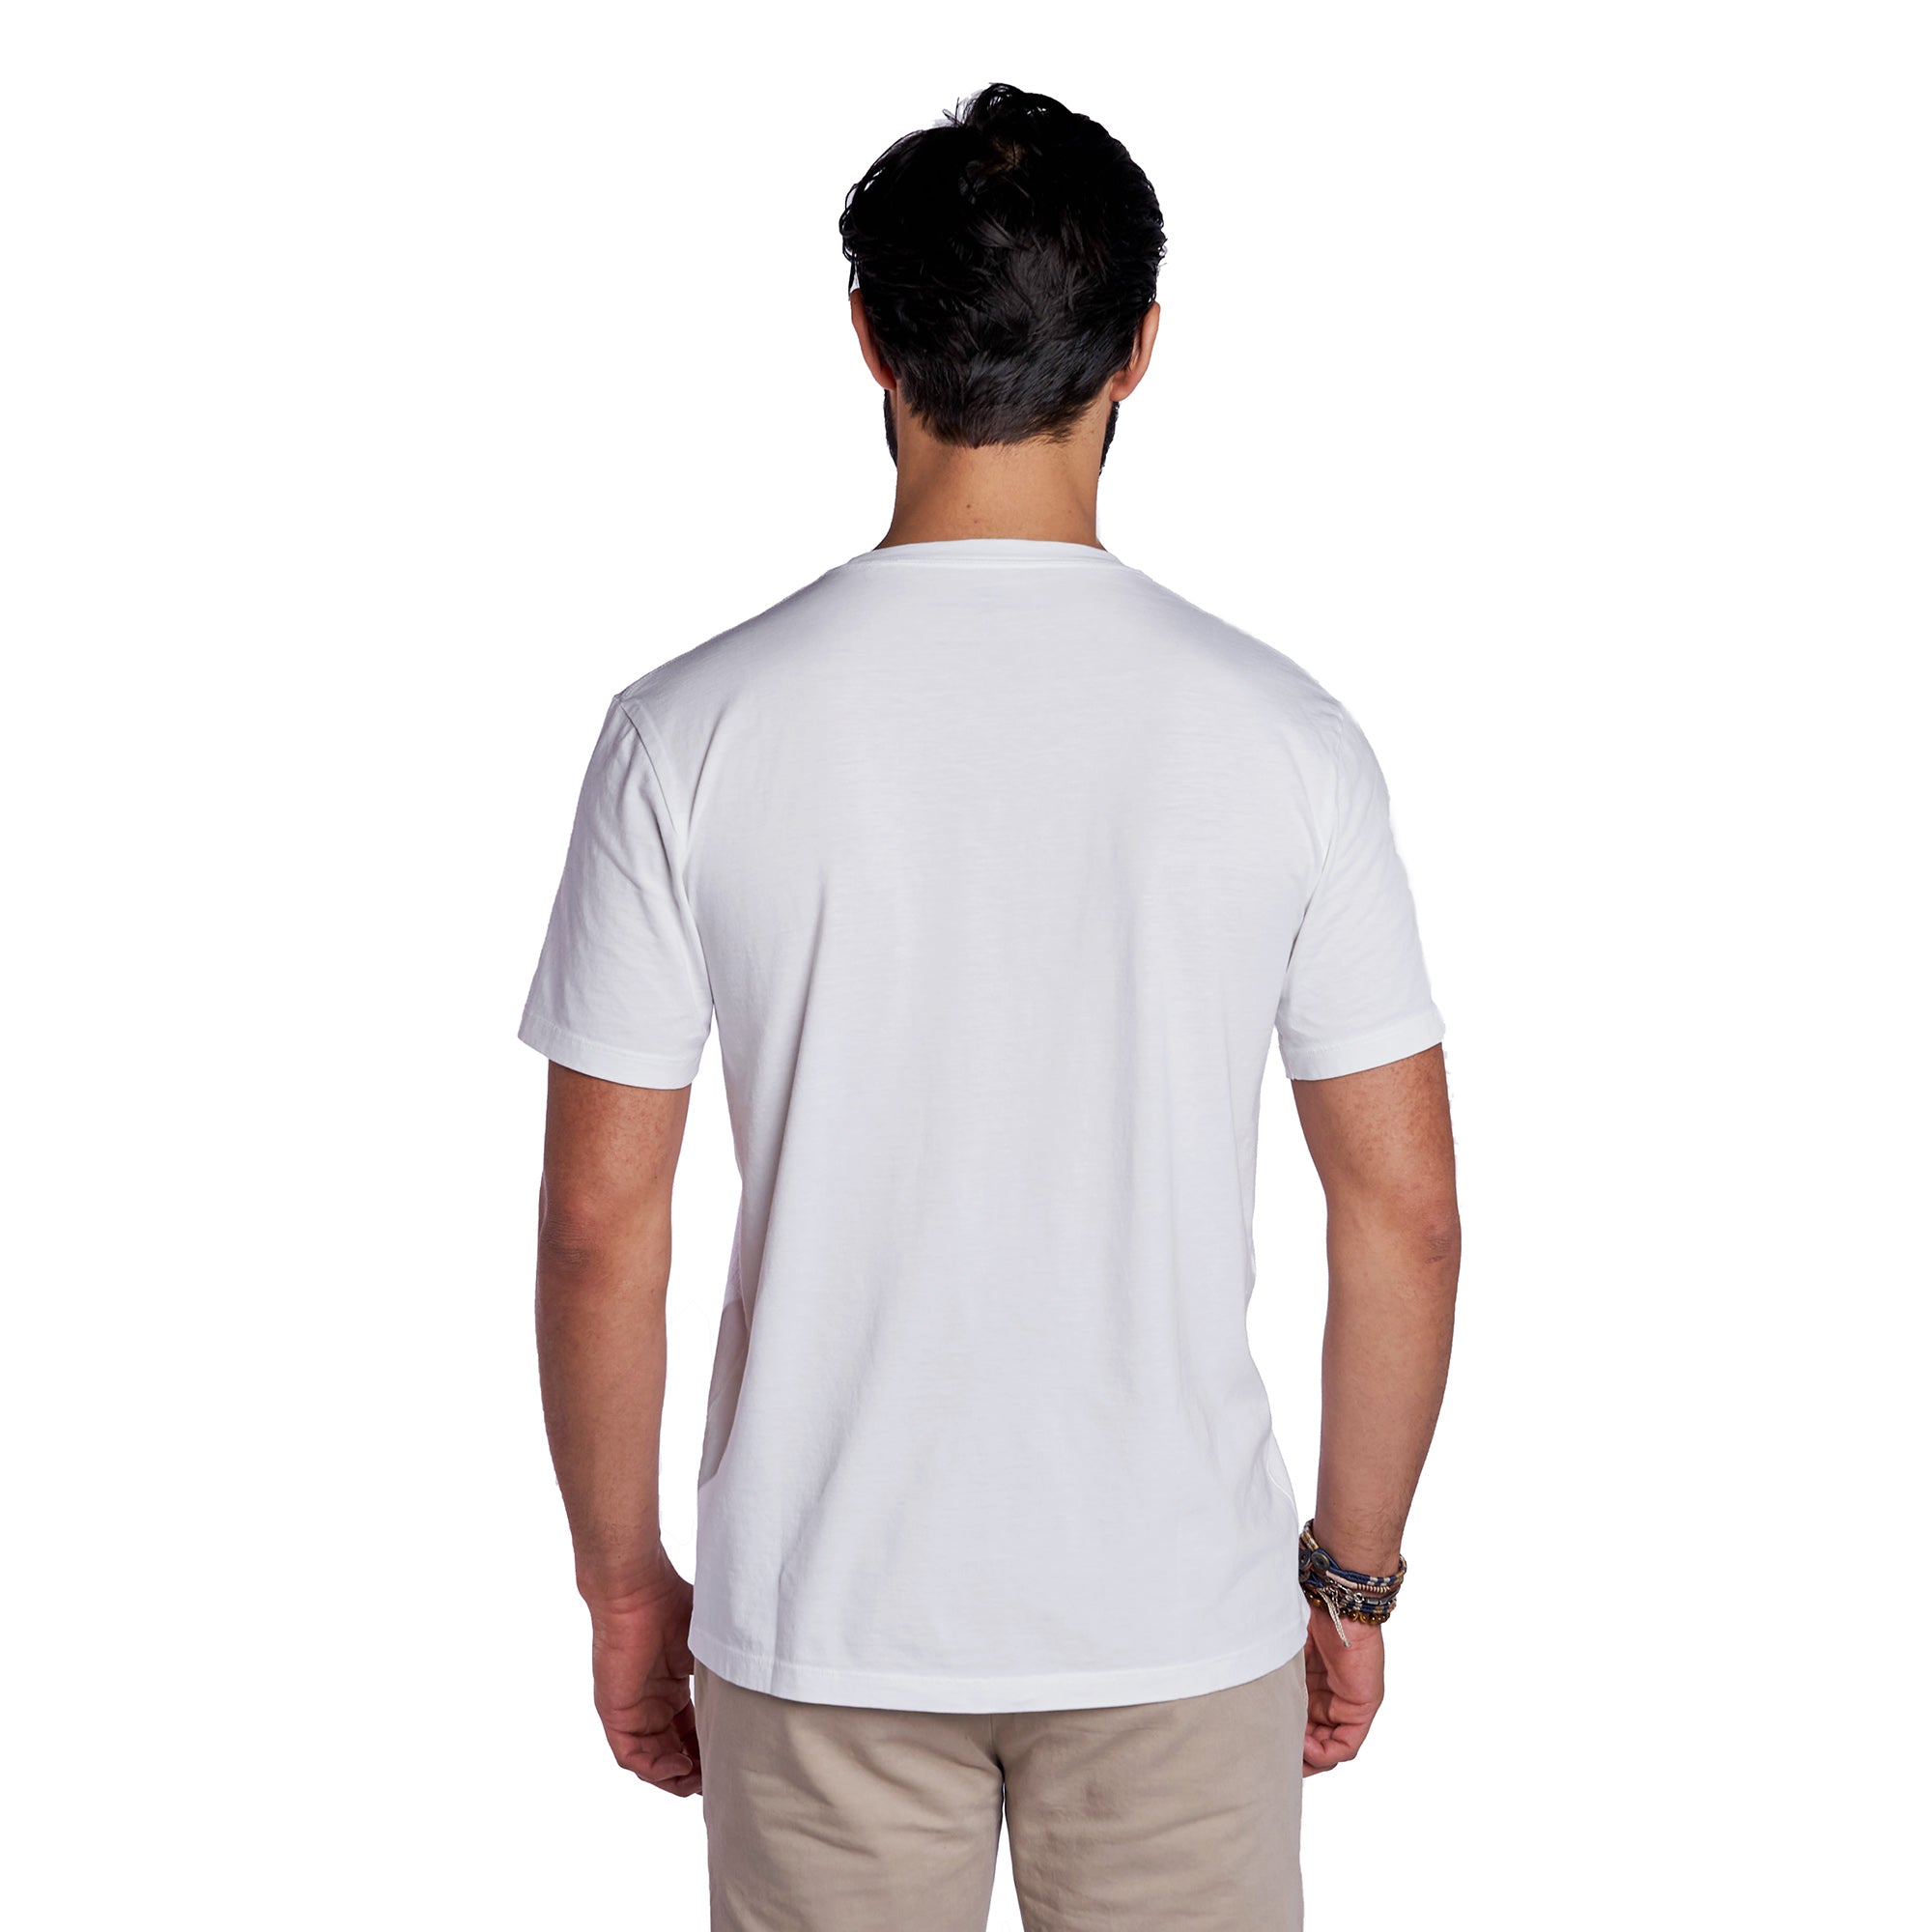 Vintage Crew T-Shirt, White | Peter Manning NYC